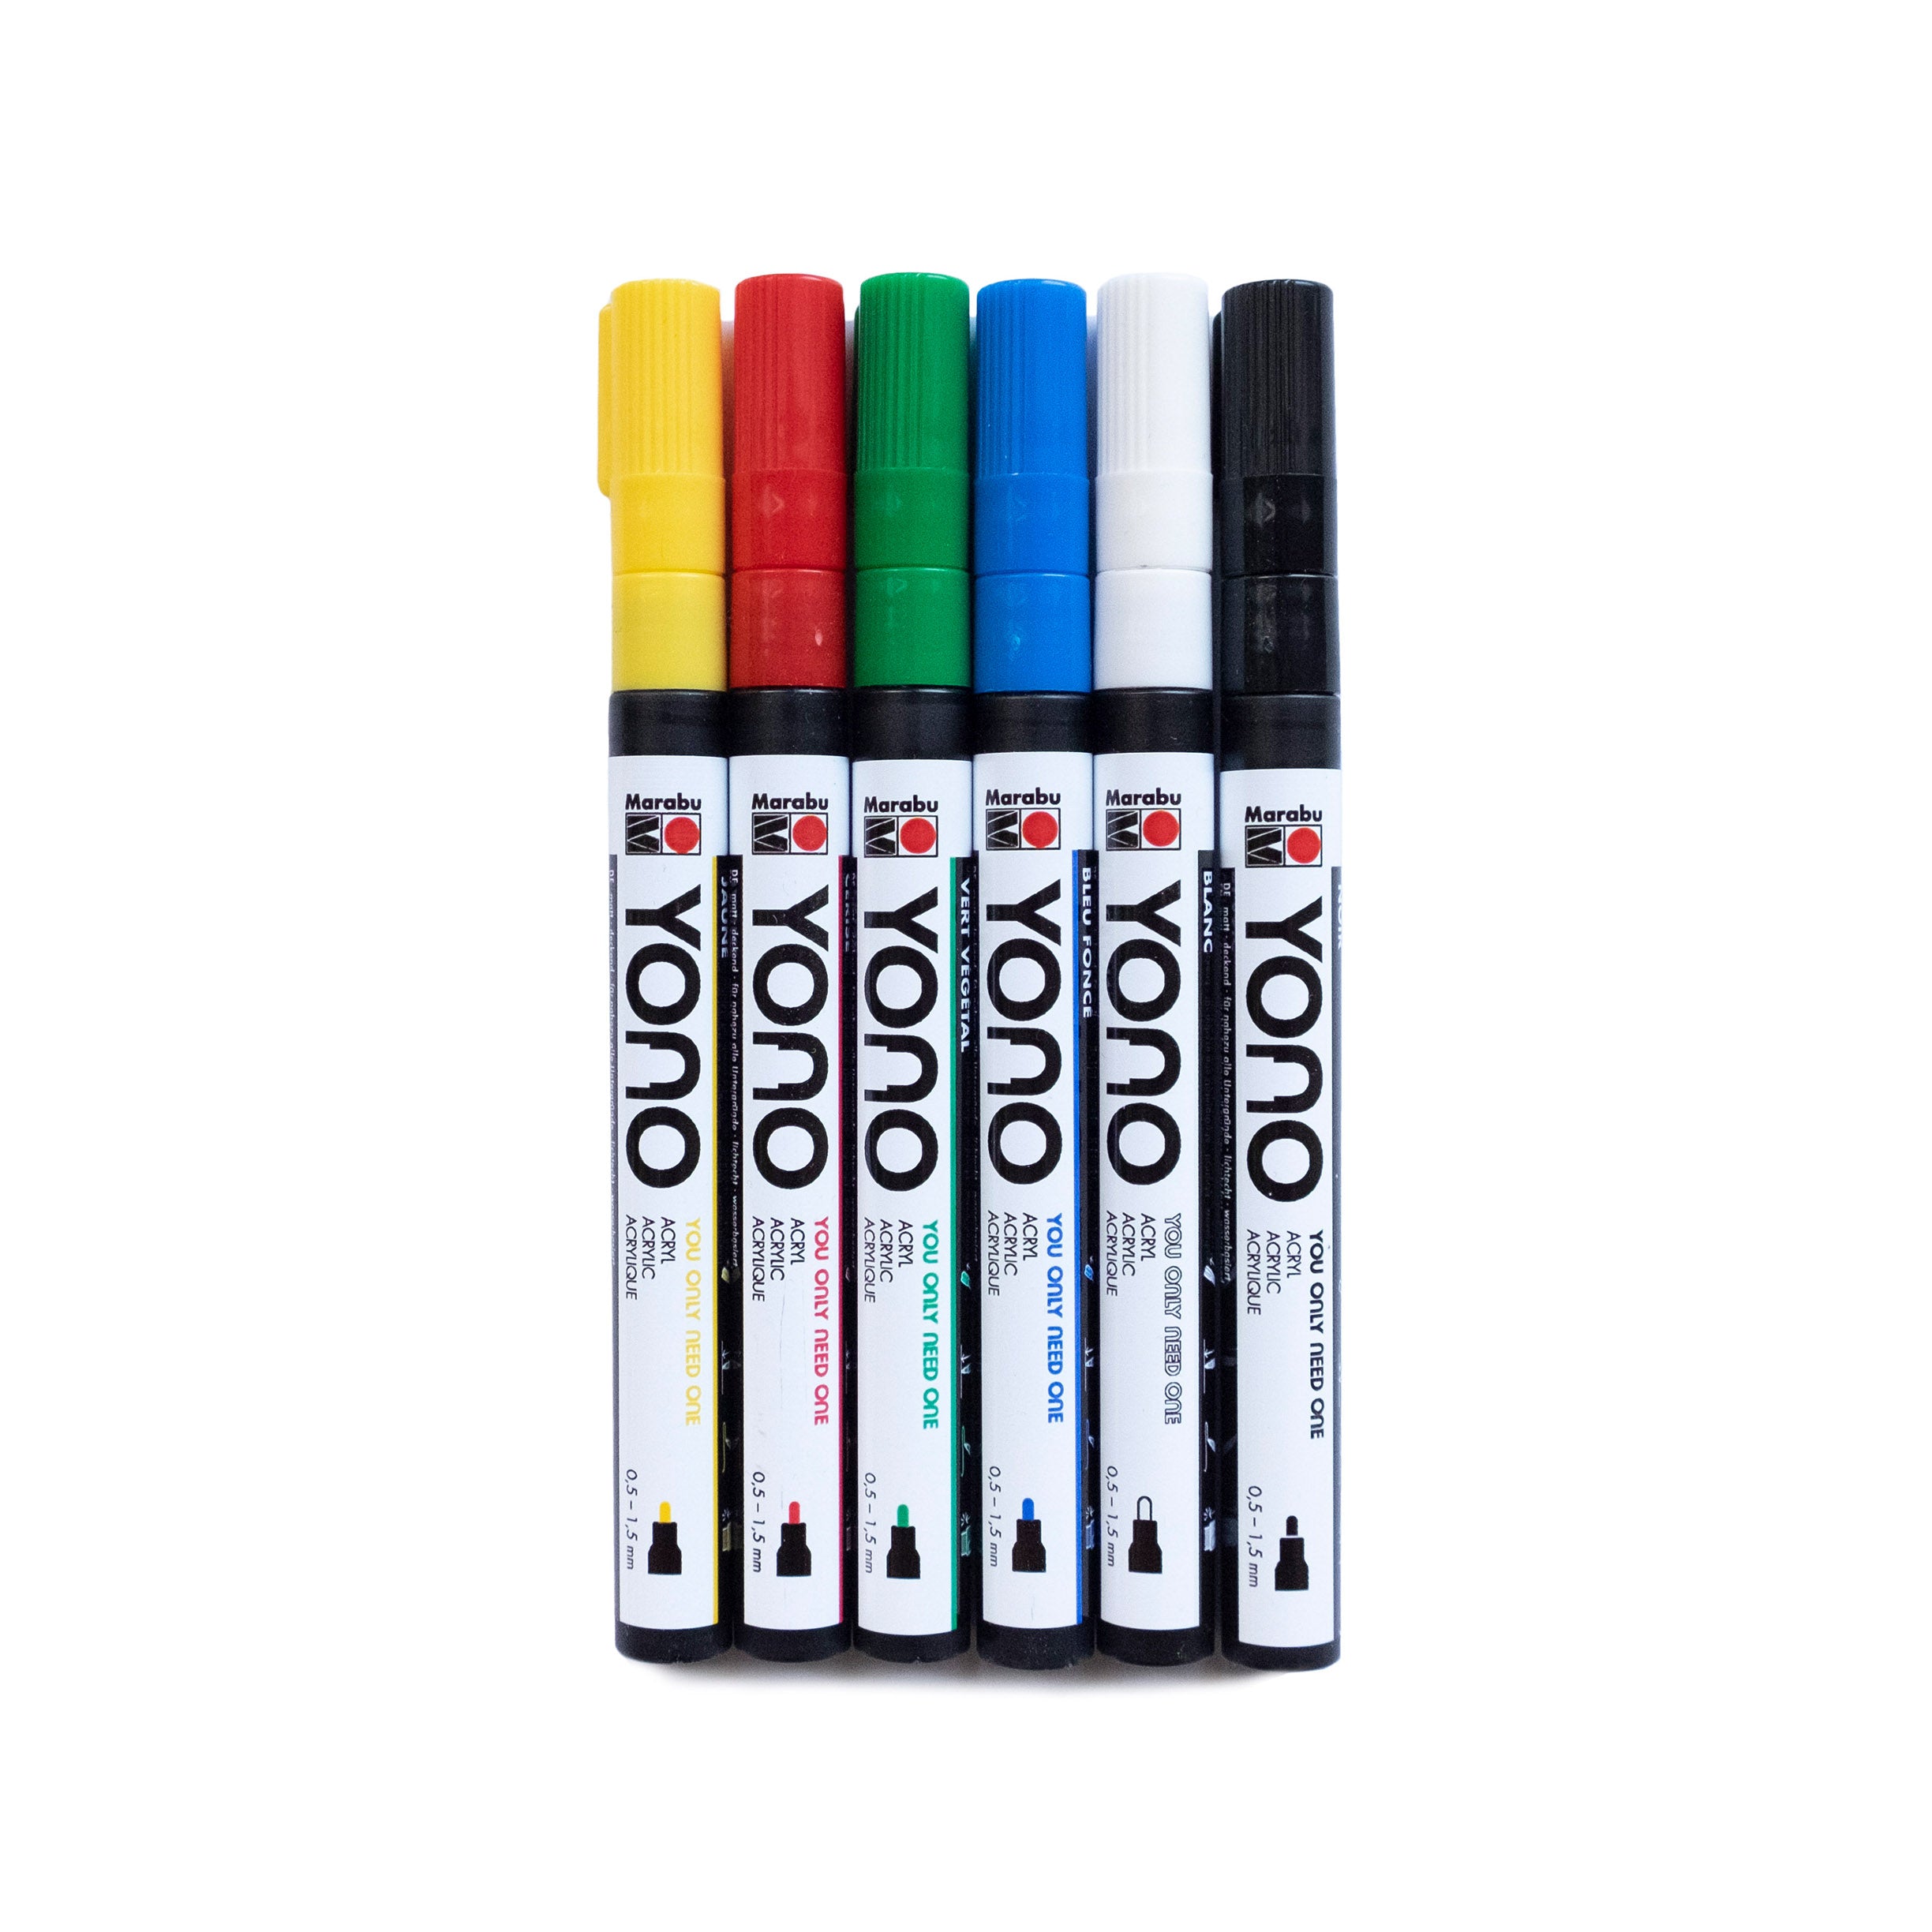 Marabu YONO Acrylic Markers - 0.5-1.5mm Tip, Set of 6